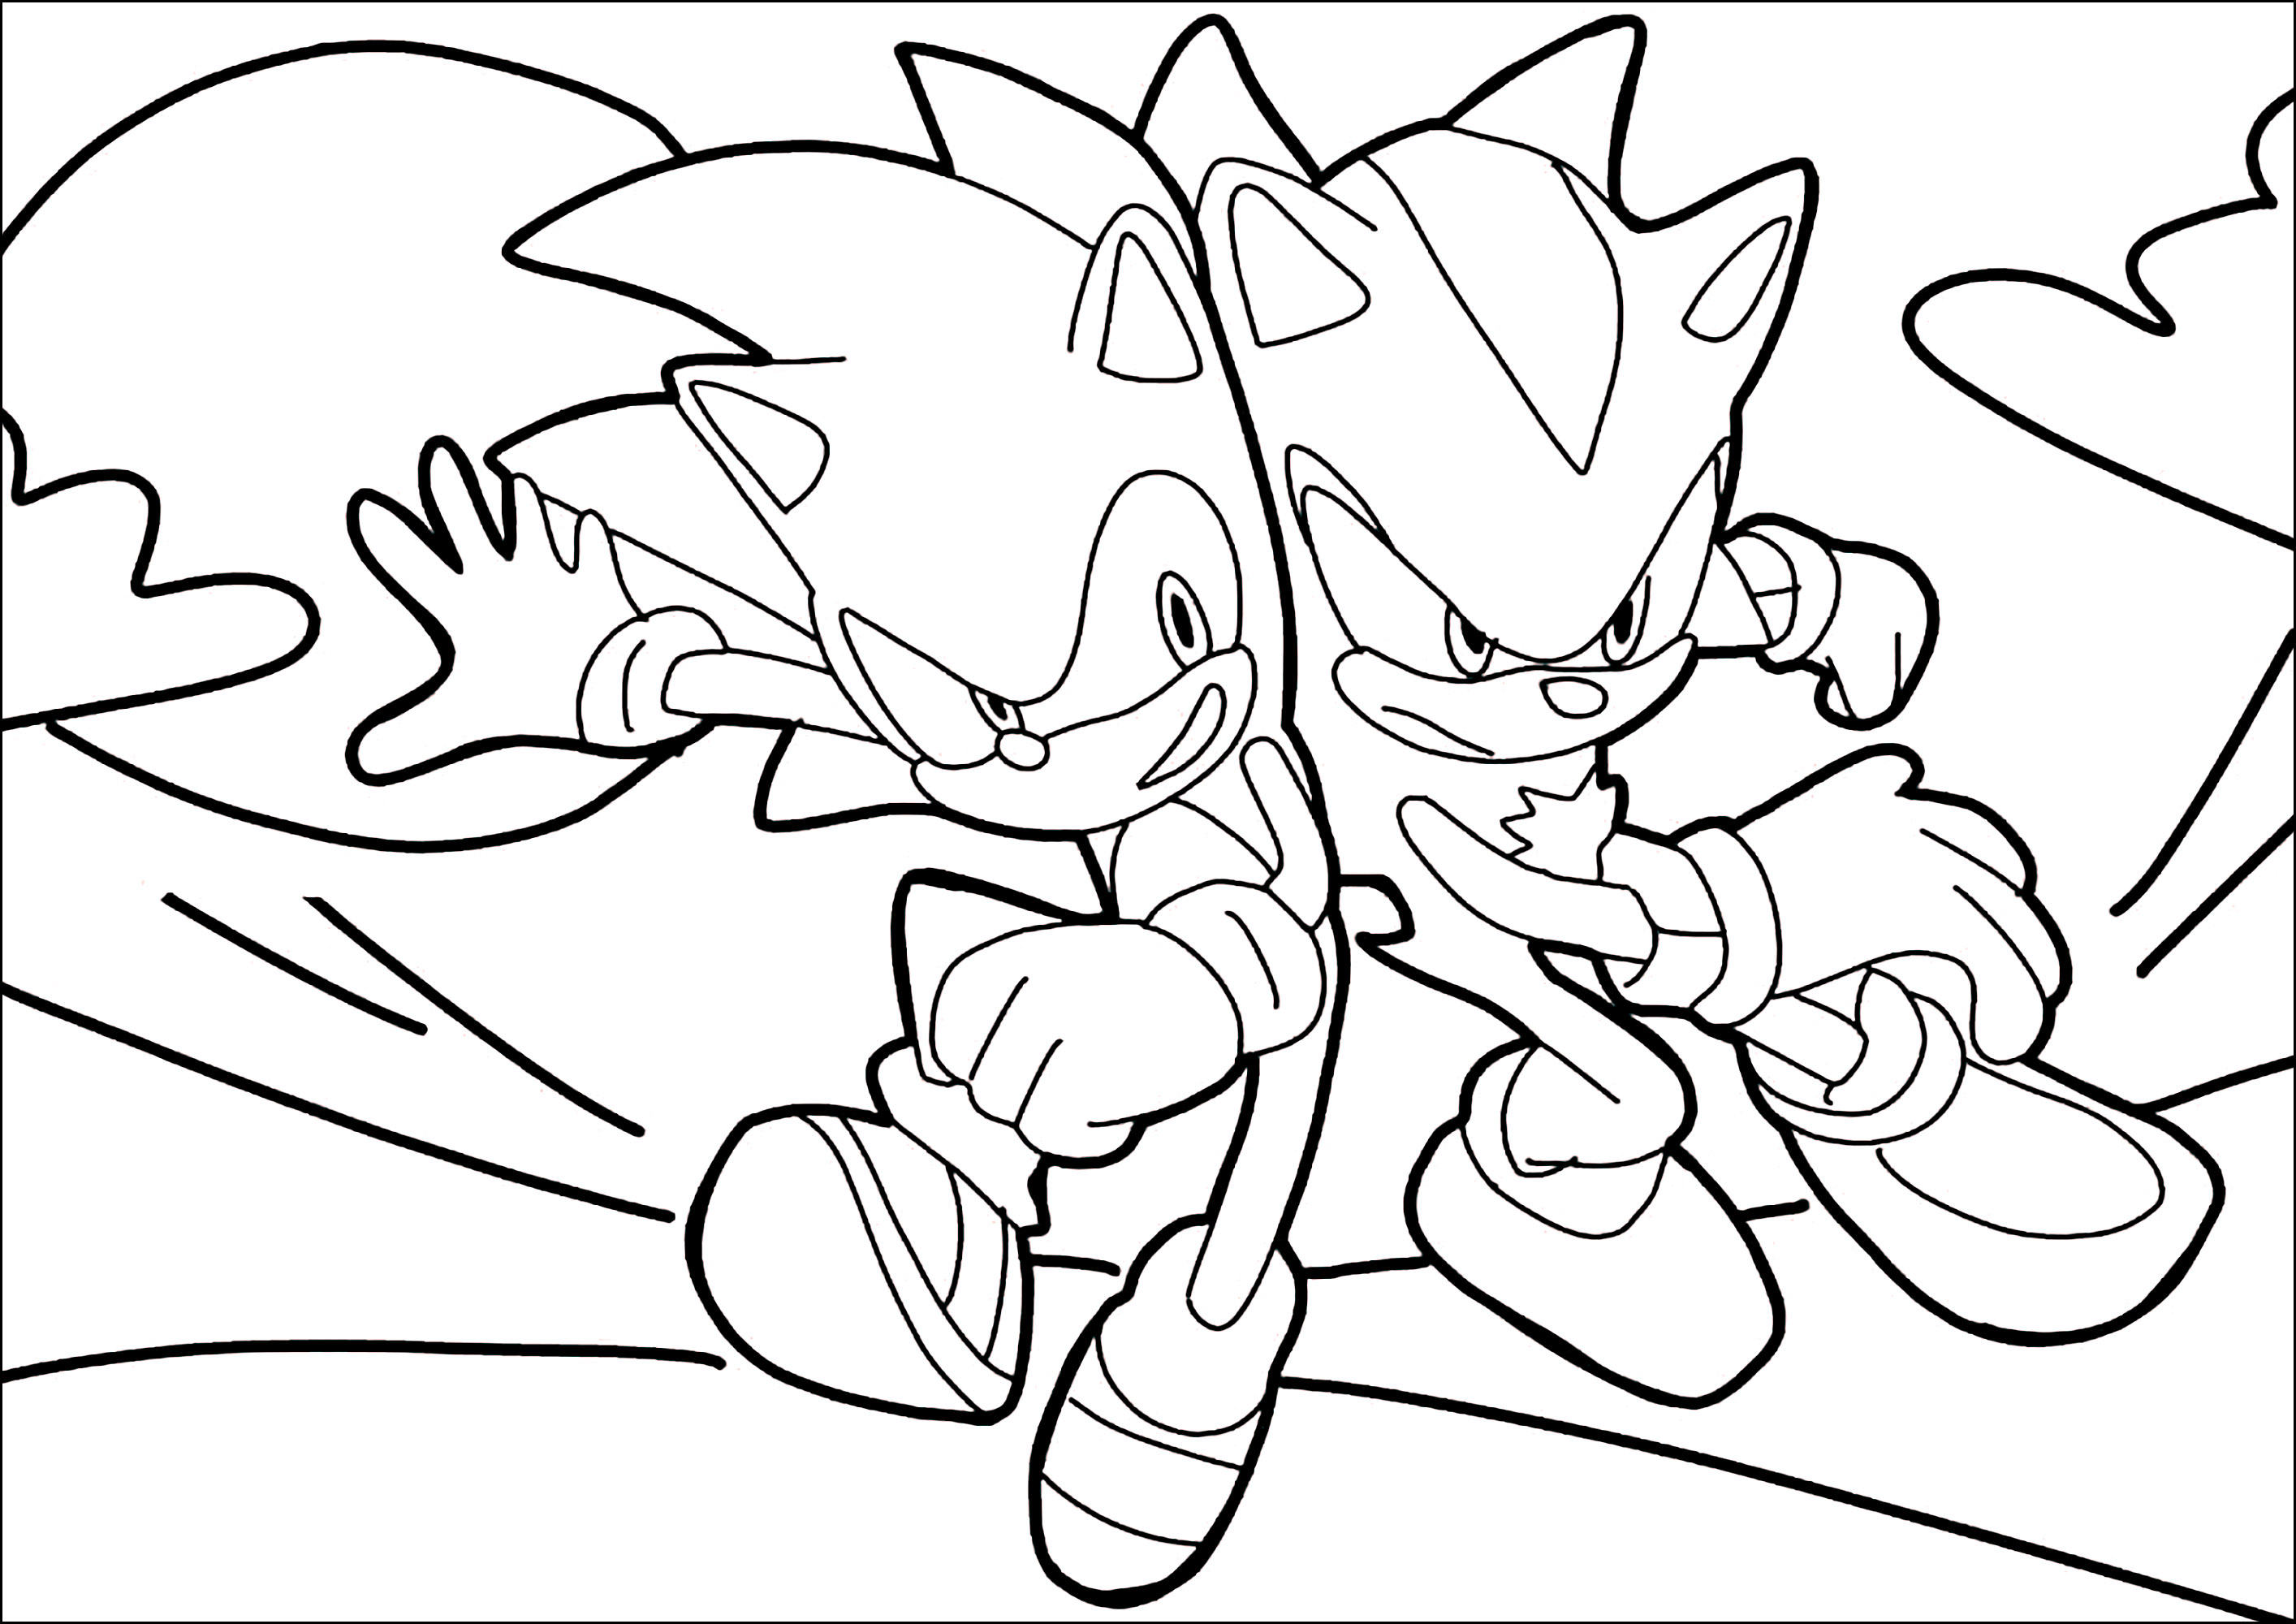 Shadow the hedgehog com Sonic